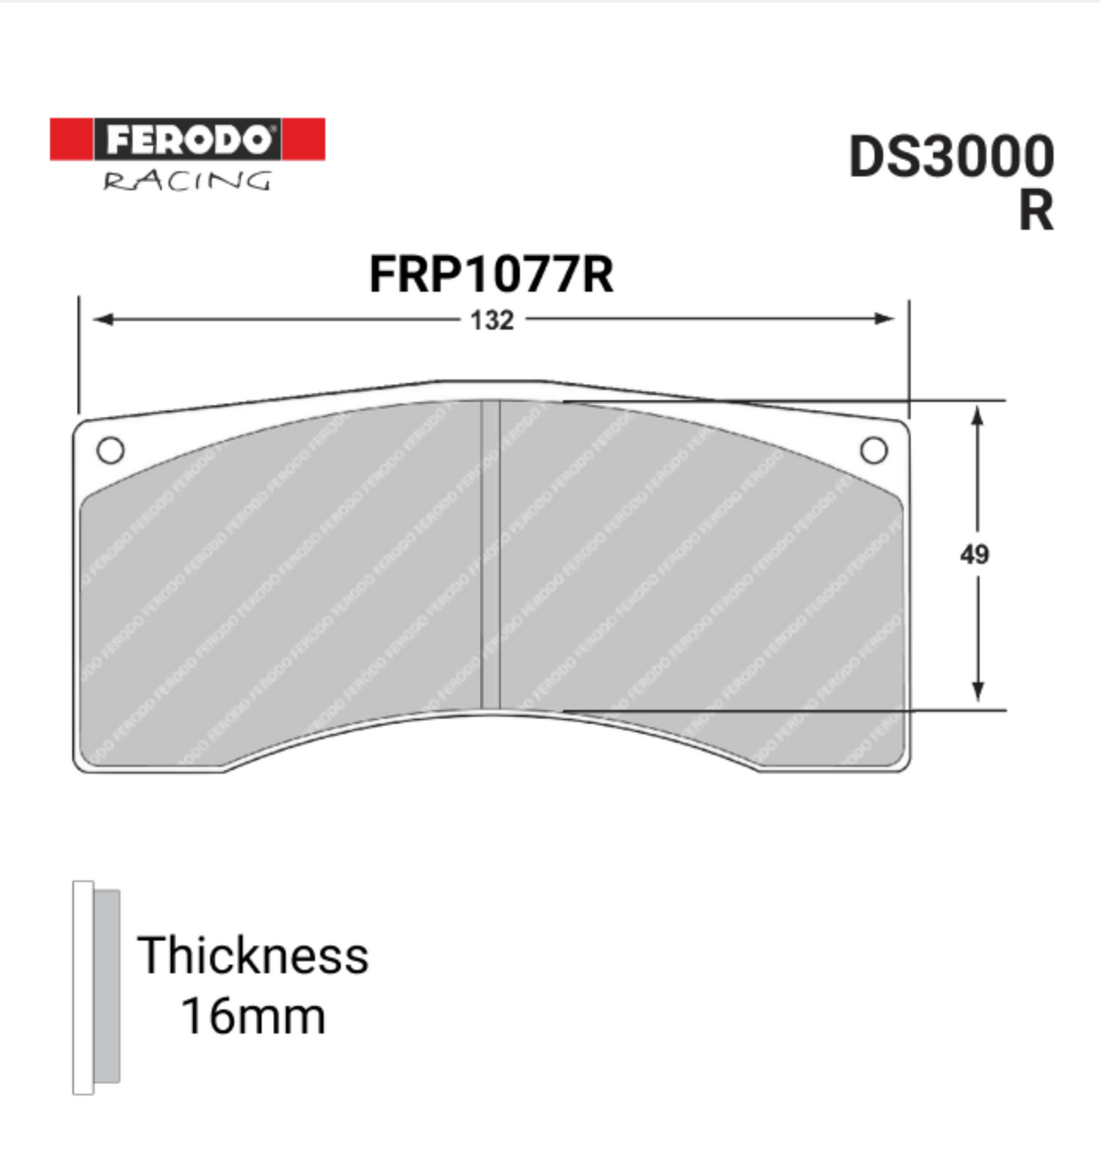 Ferodo FRP1077R DS3000 Brake Pads